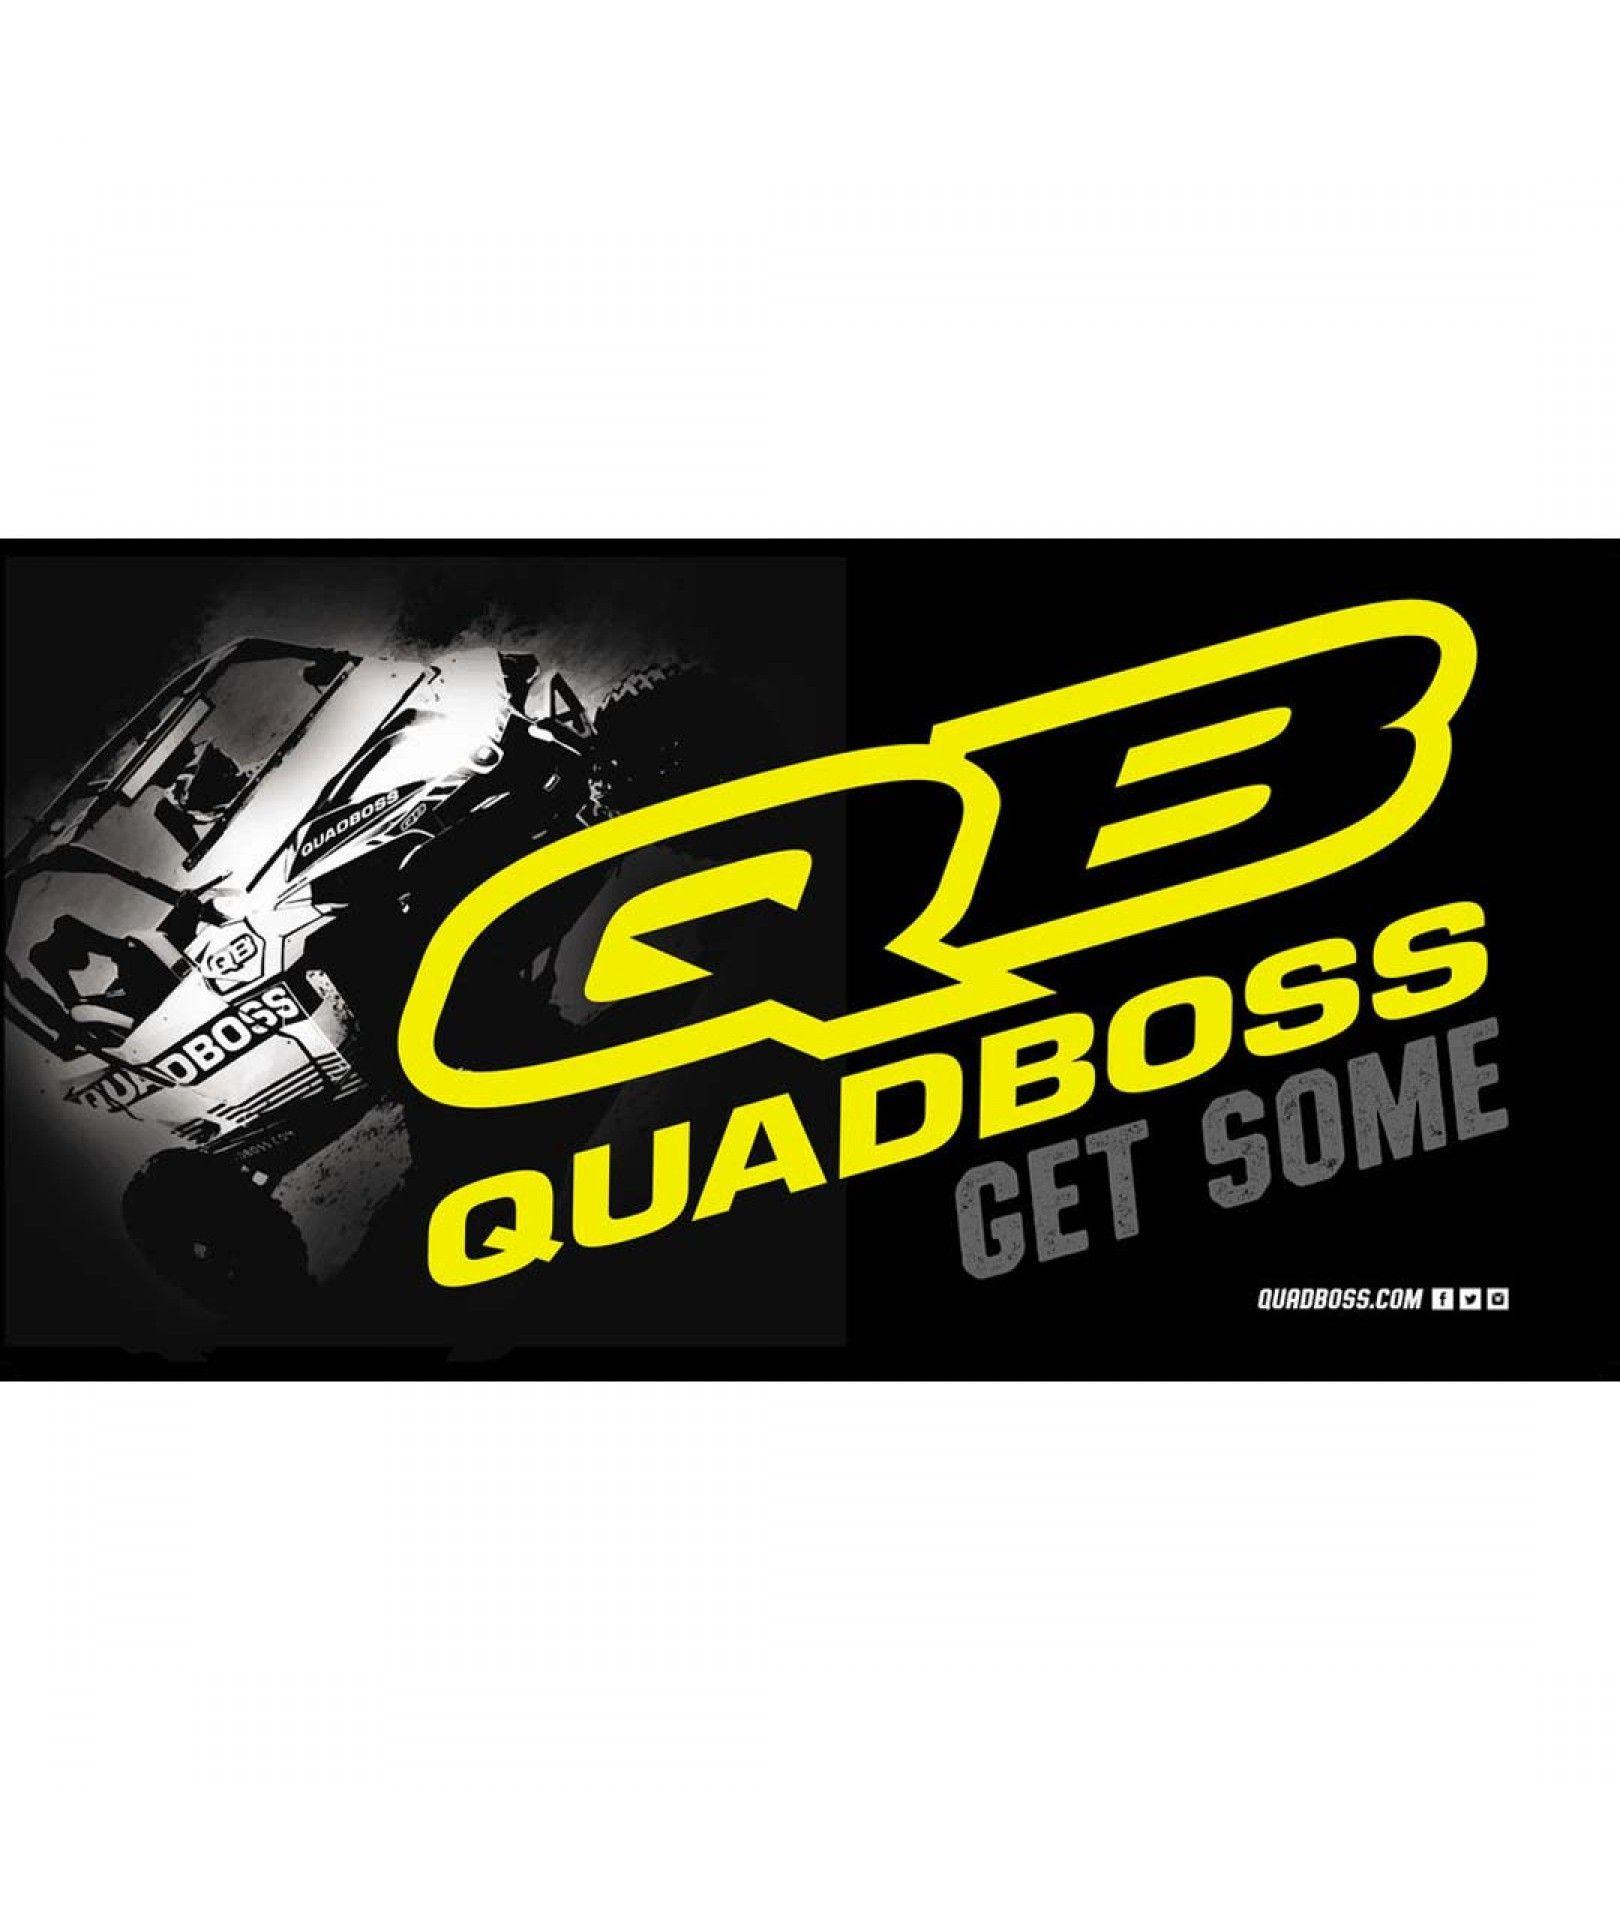 Quadboss Logo - UTV Promotional Banner - Products